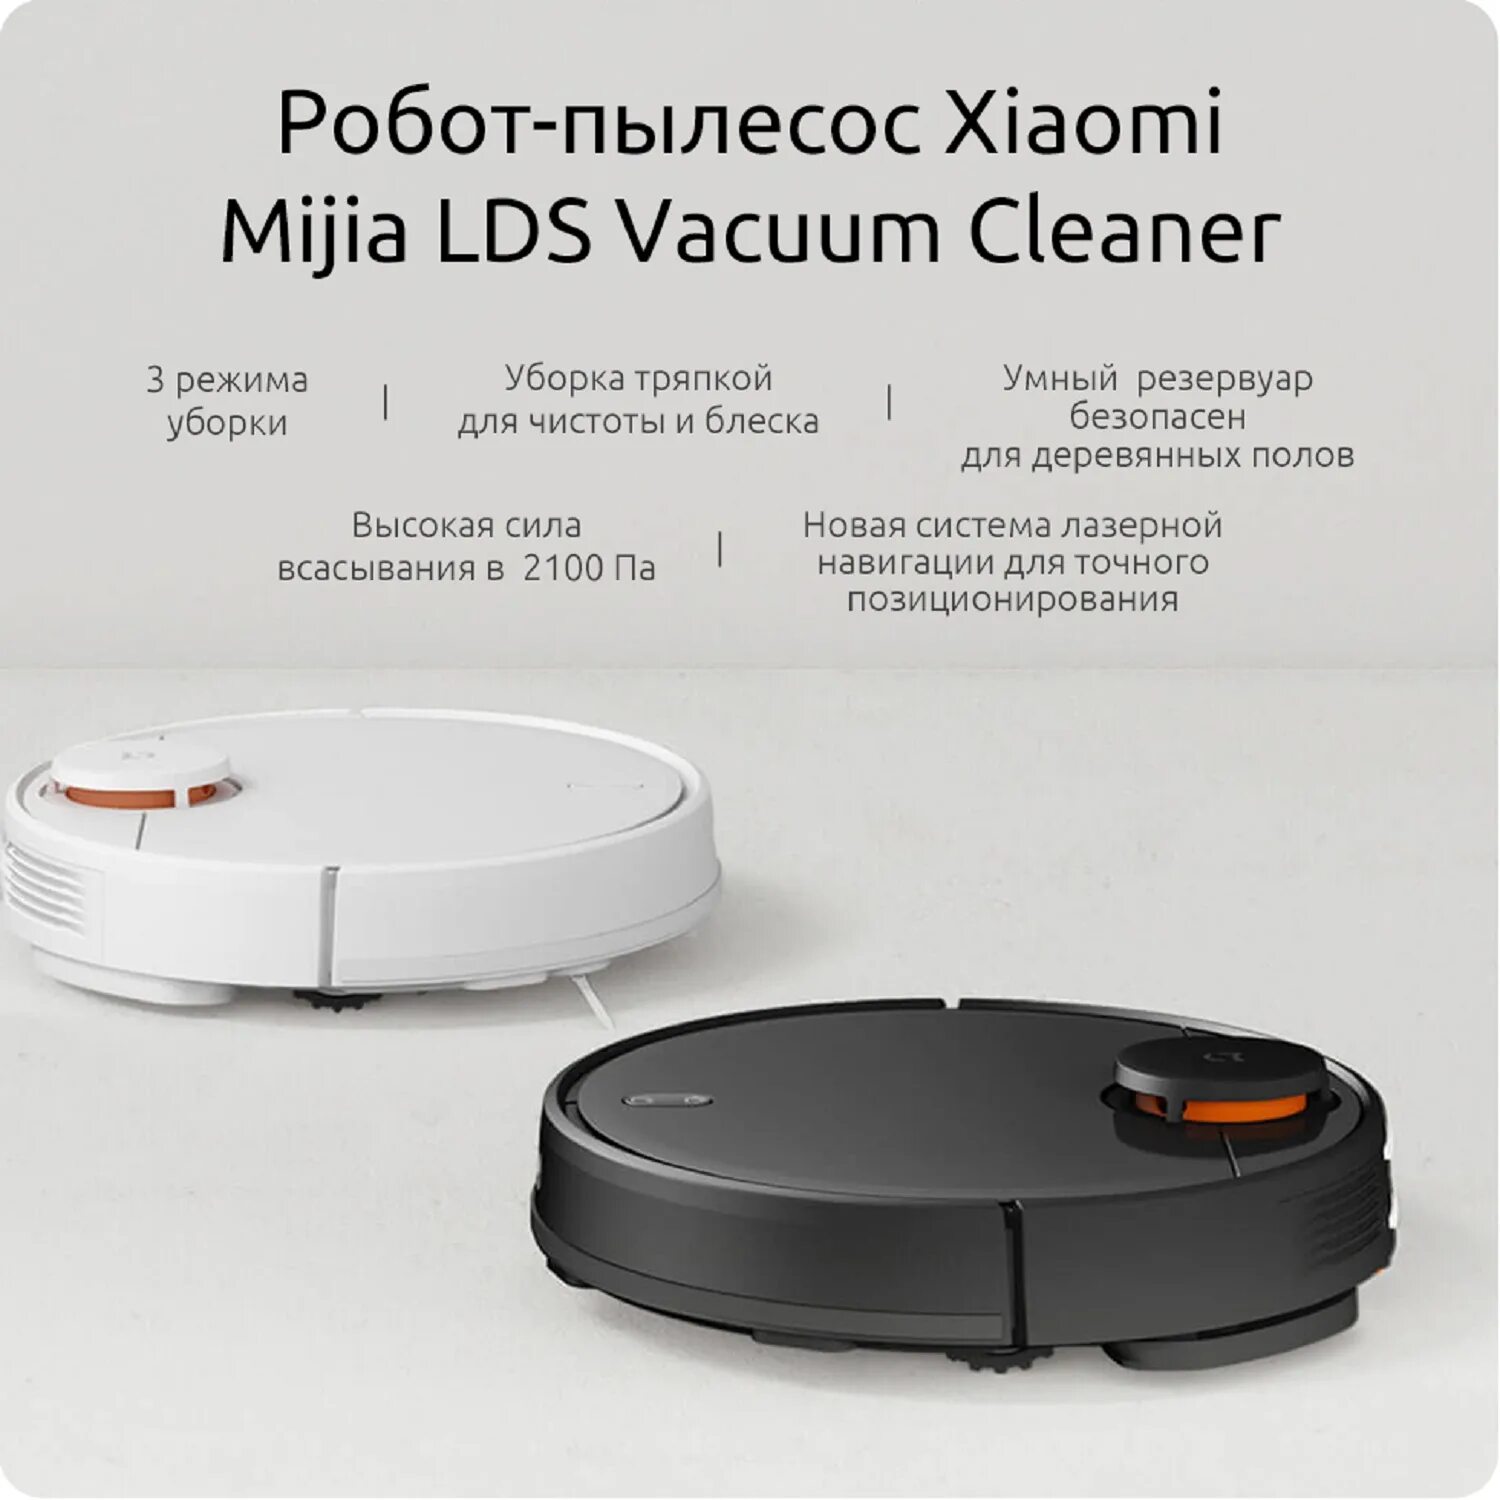 Xiaomi mijia lds vacuum clean. Робот-пылесос Xiaomi Mijia Robot Vacuum Cleaner. Робот пылесос Xiaomi Mijia Vacuum Cleaner. Робот пылесос Xiaomi mi LDS Vacuum Cleaner. Xiaomi Mijia Robot Vacuum Mop 2 Pro.